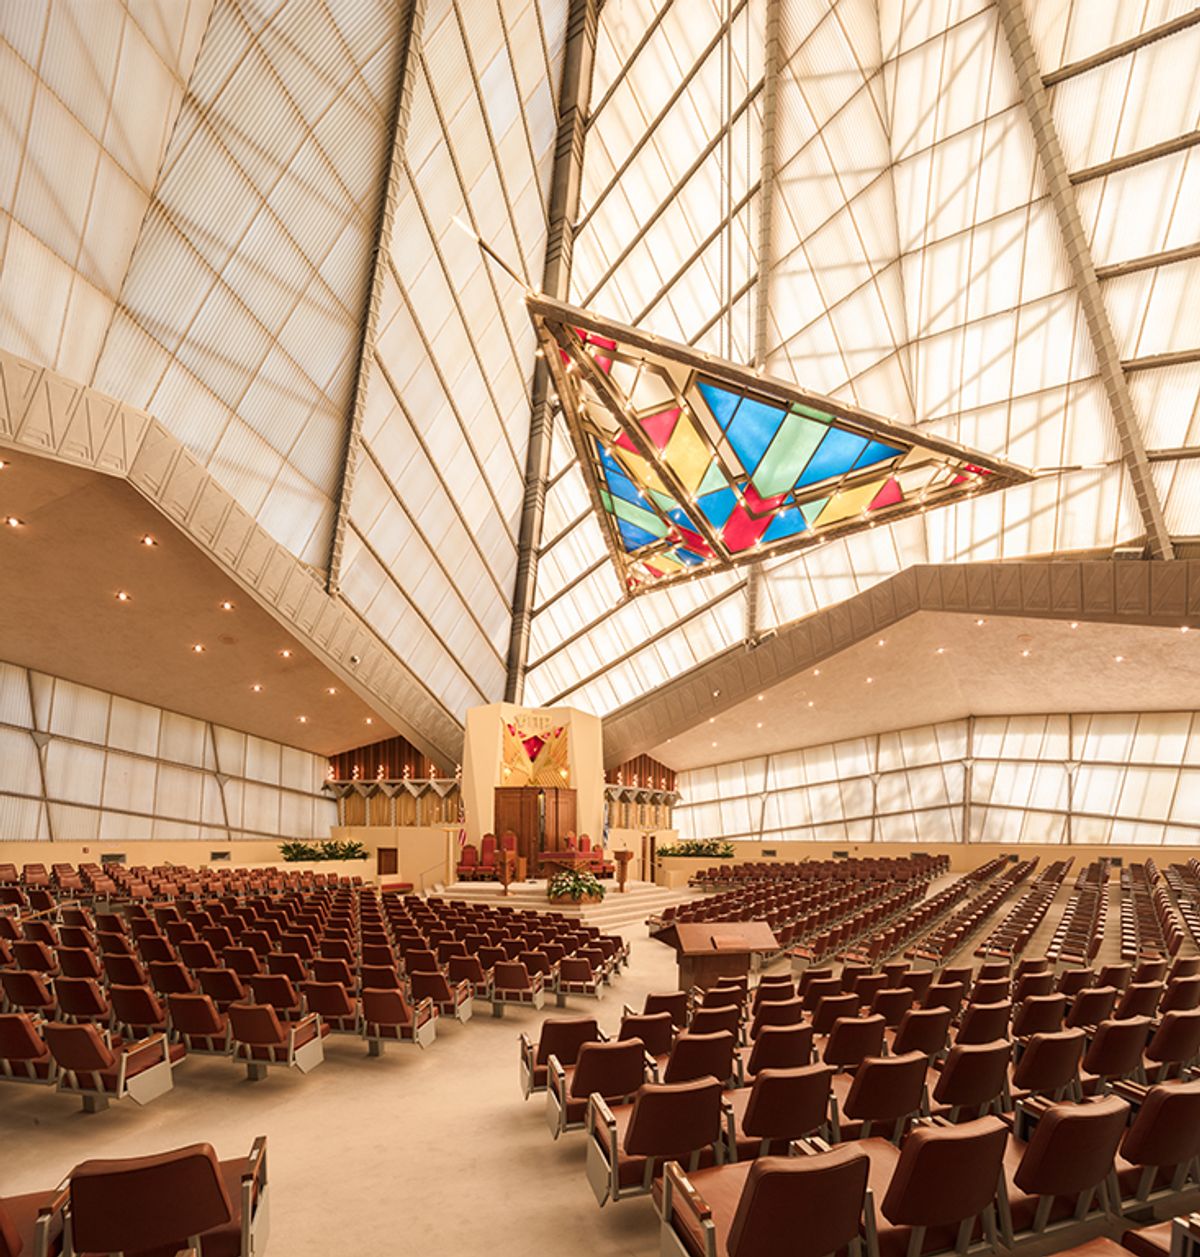 The interior of Beth Sholom Synagogue in Elkins Park, Pennsylvania ©2013 Darren Bradley